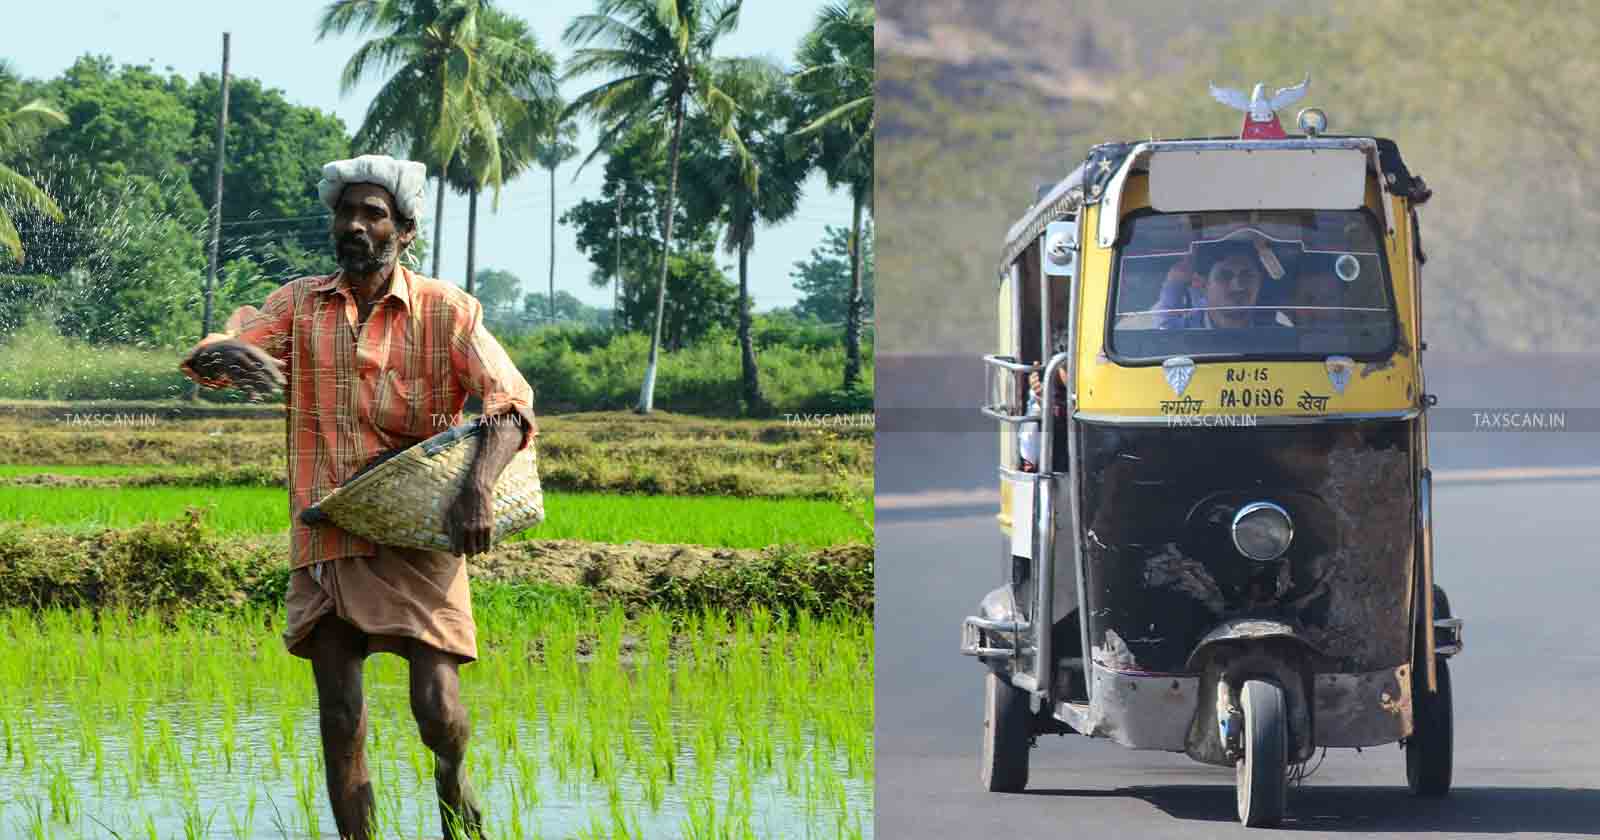 Agriculturist - Auto Driver - Bombay High Court - Assessment Order - tax assessments - improper sanction - taxscan